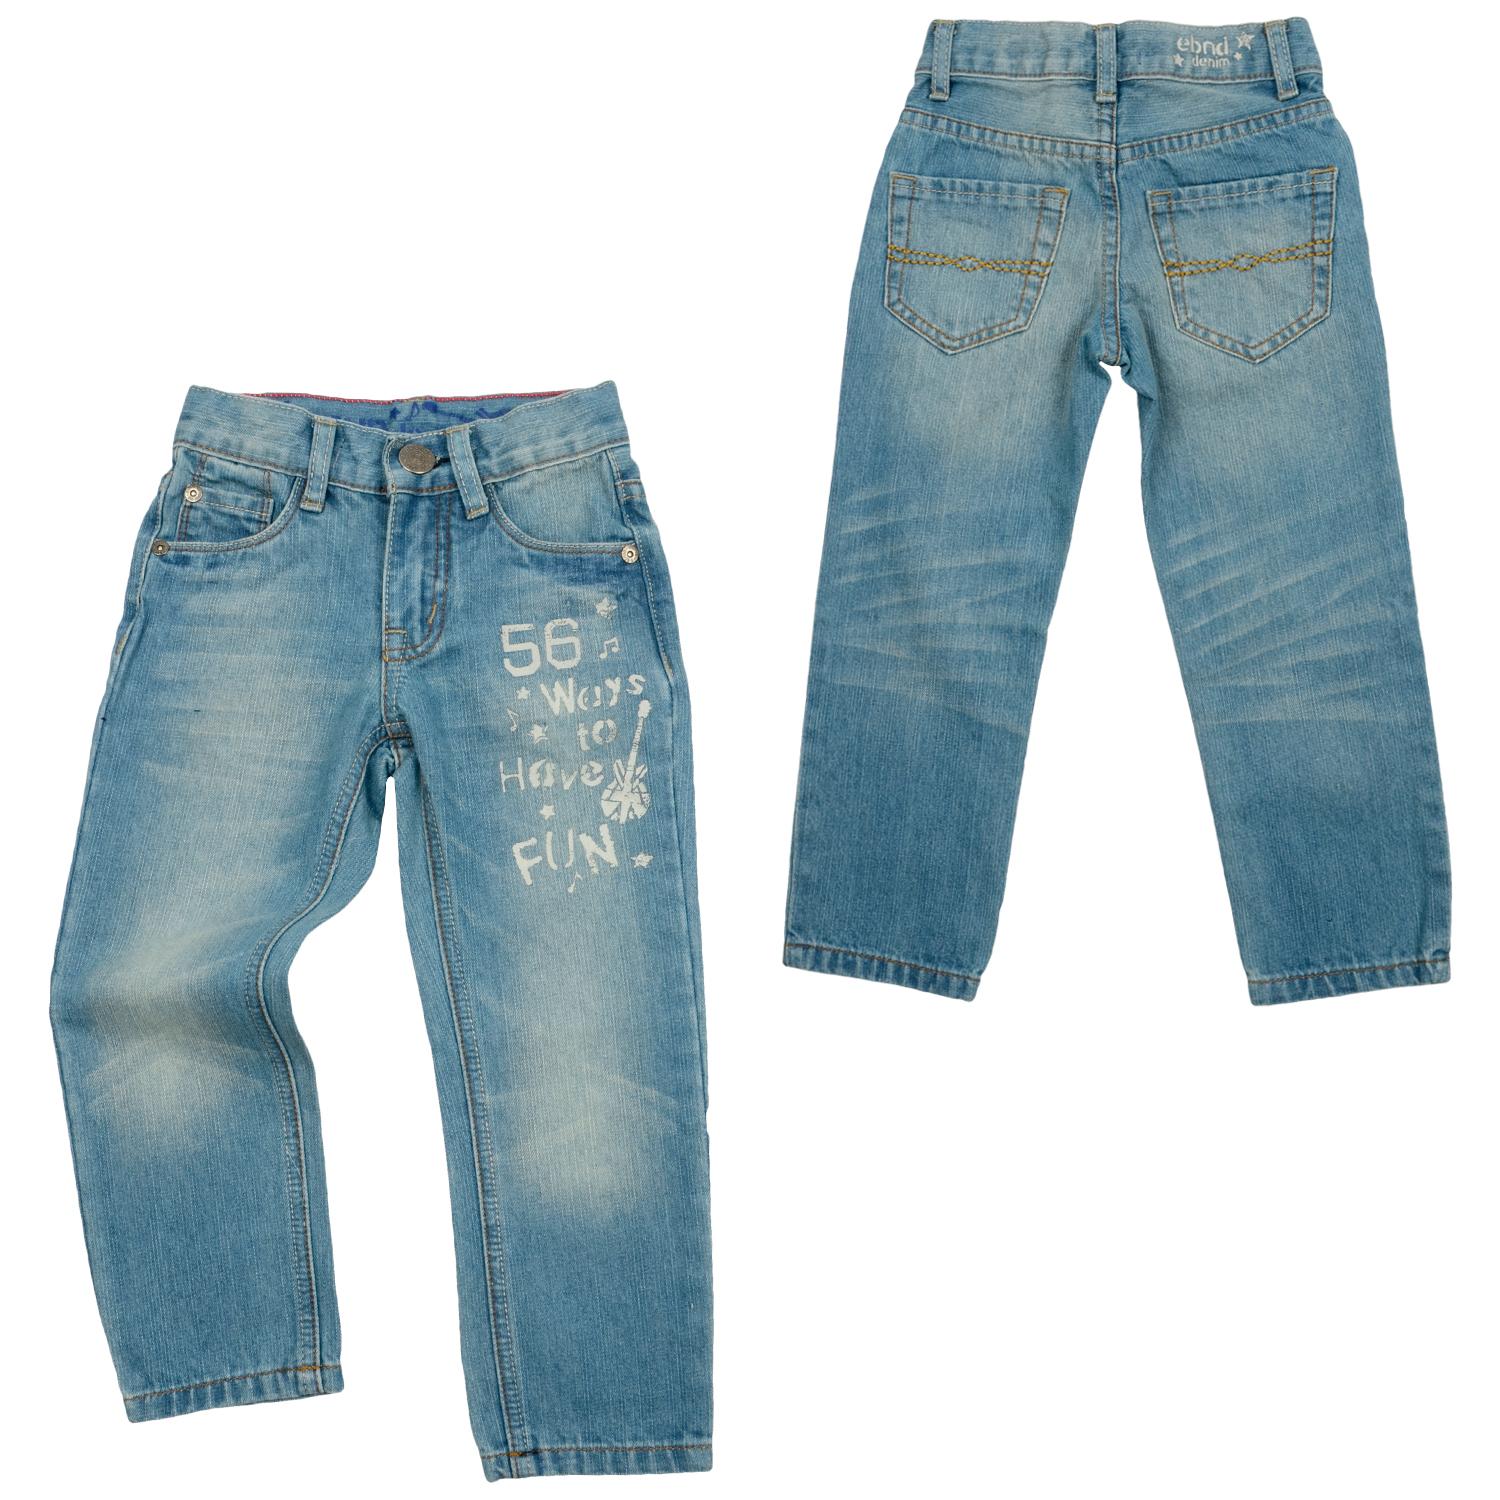 Foto Earthbound Boys Waistband Woven Denim Jeans Azul Claro foto 643567